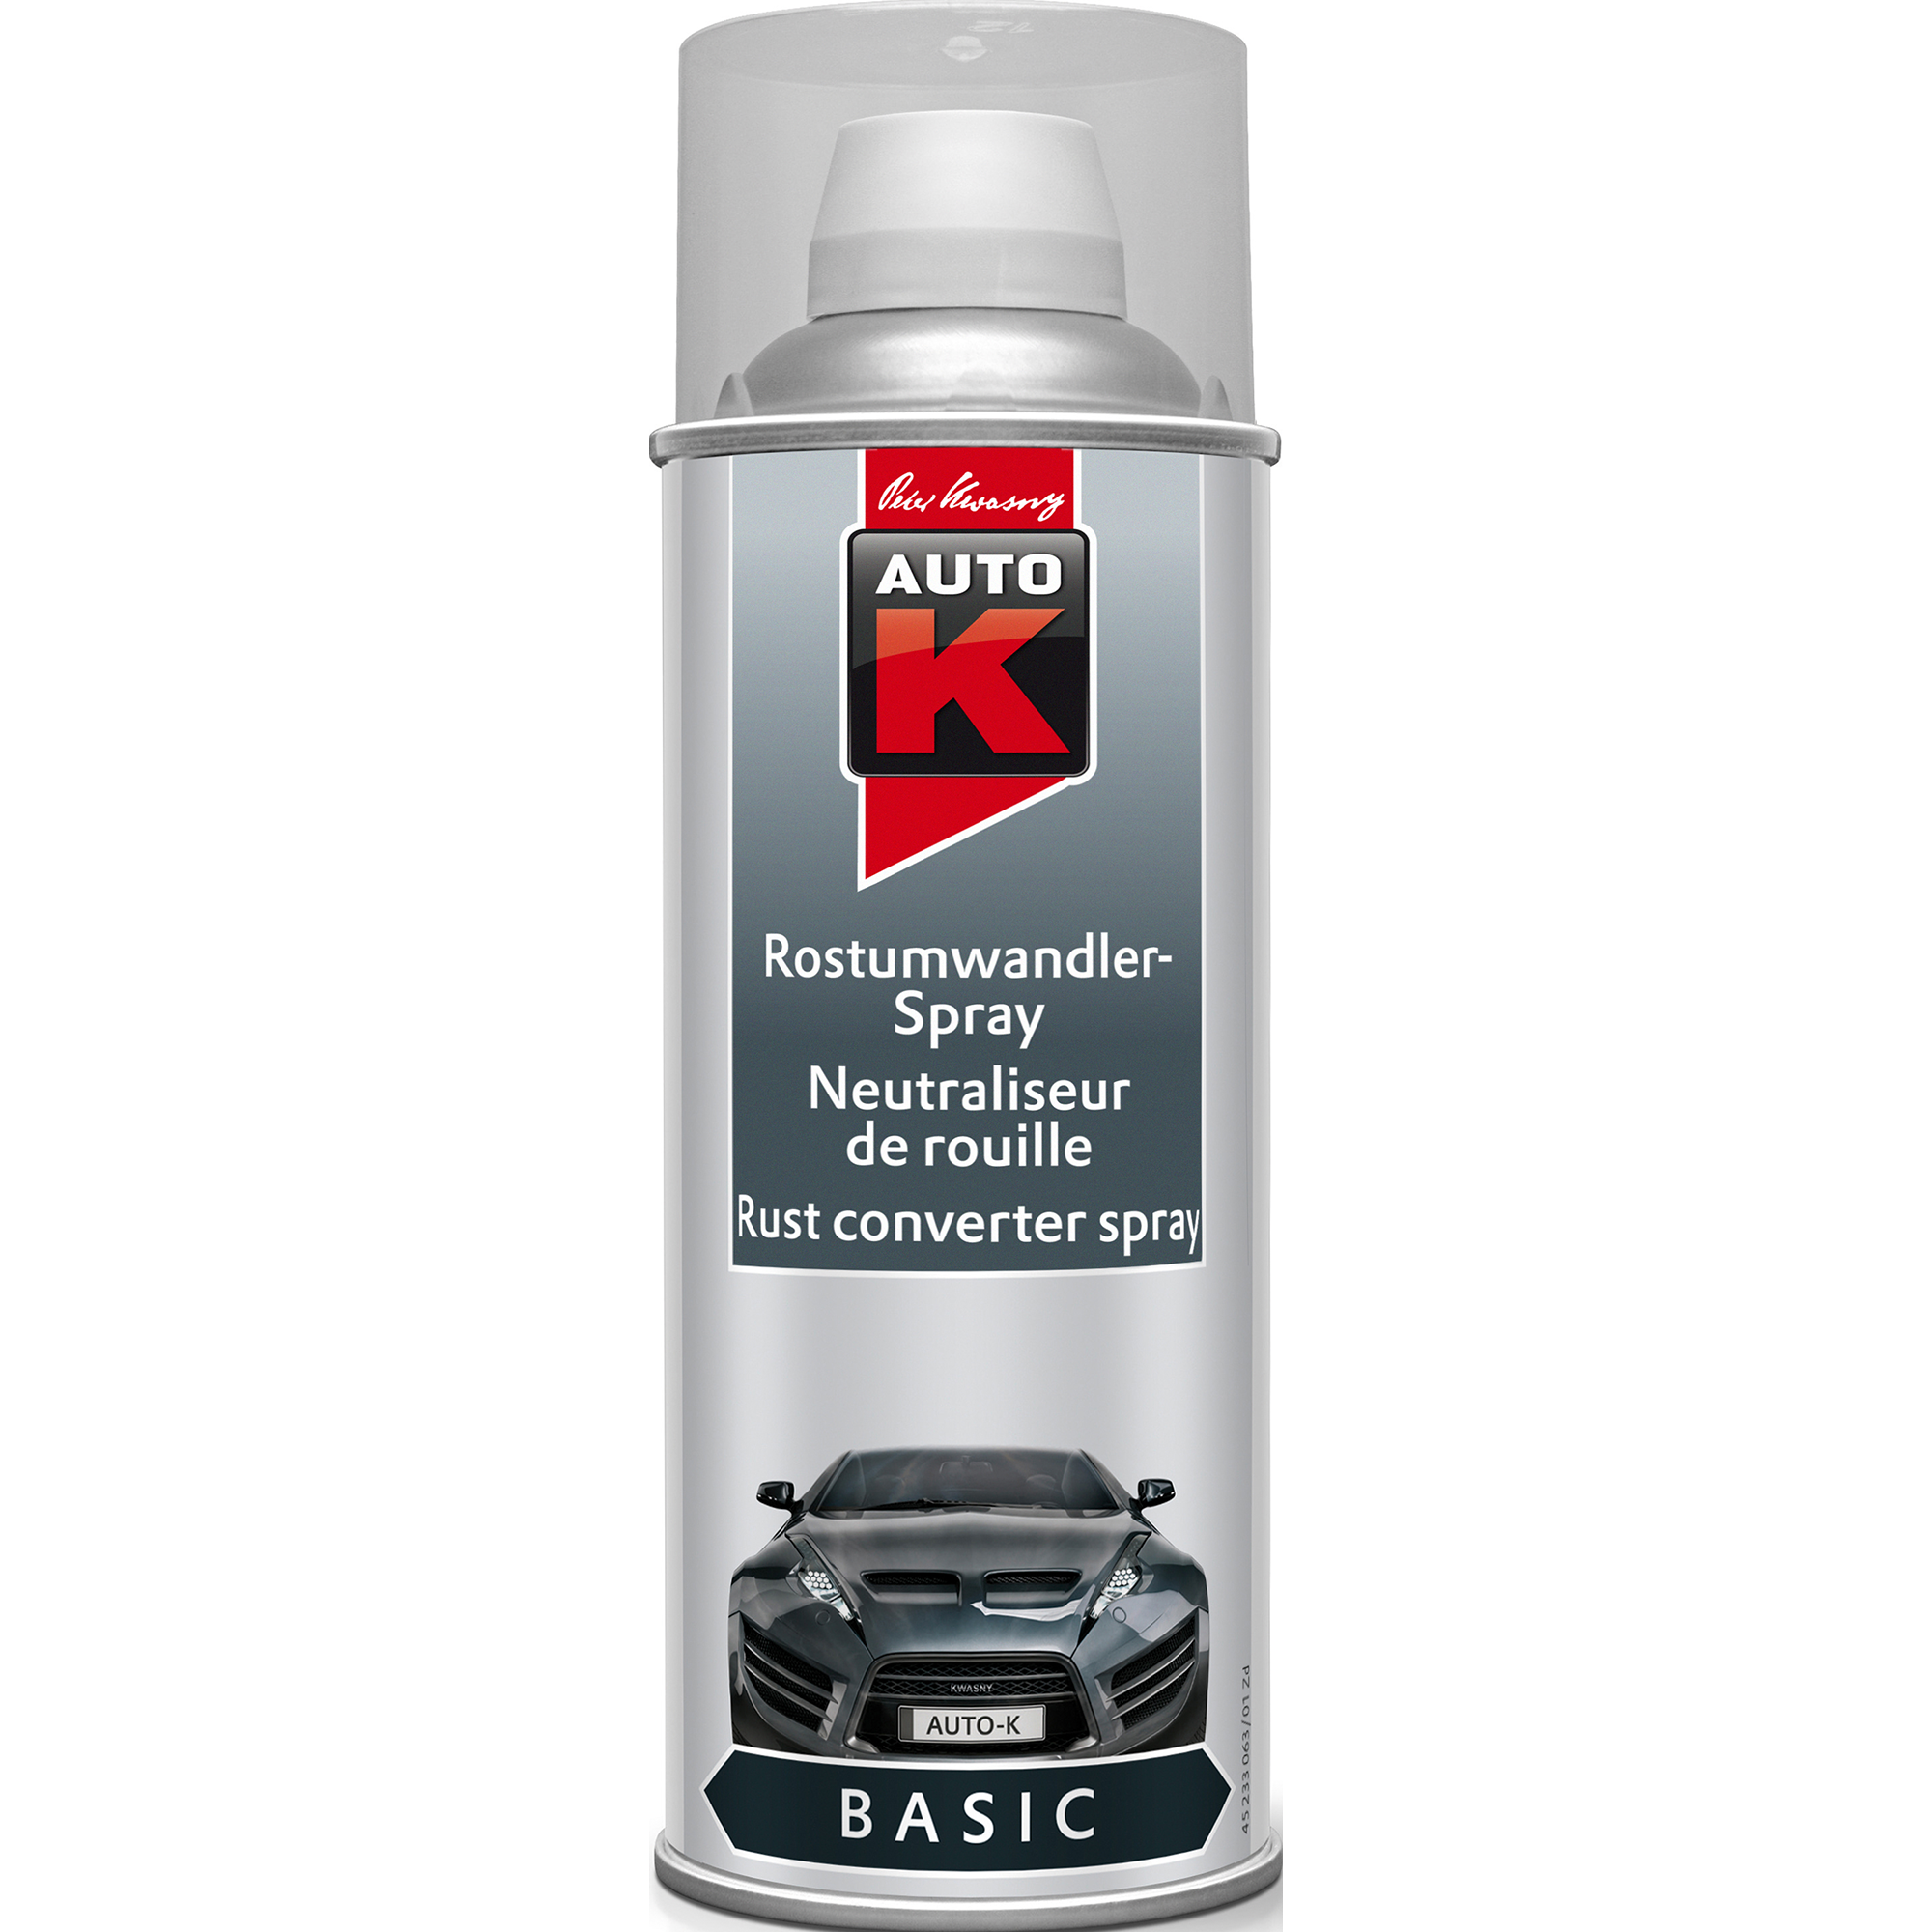 Rostumwandler-Spray 'Auto-K' Basic 400 ml + product picture